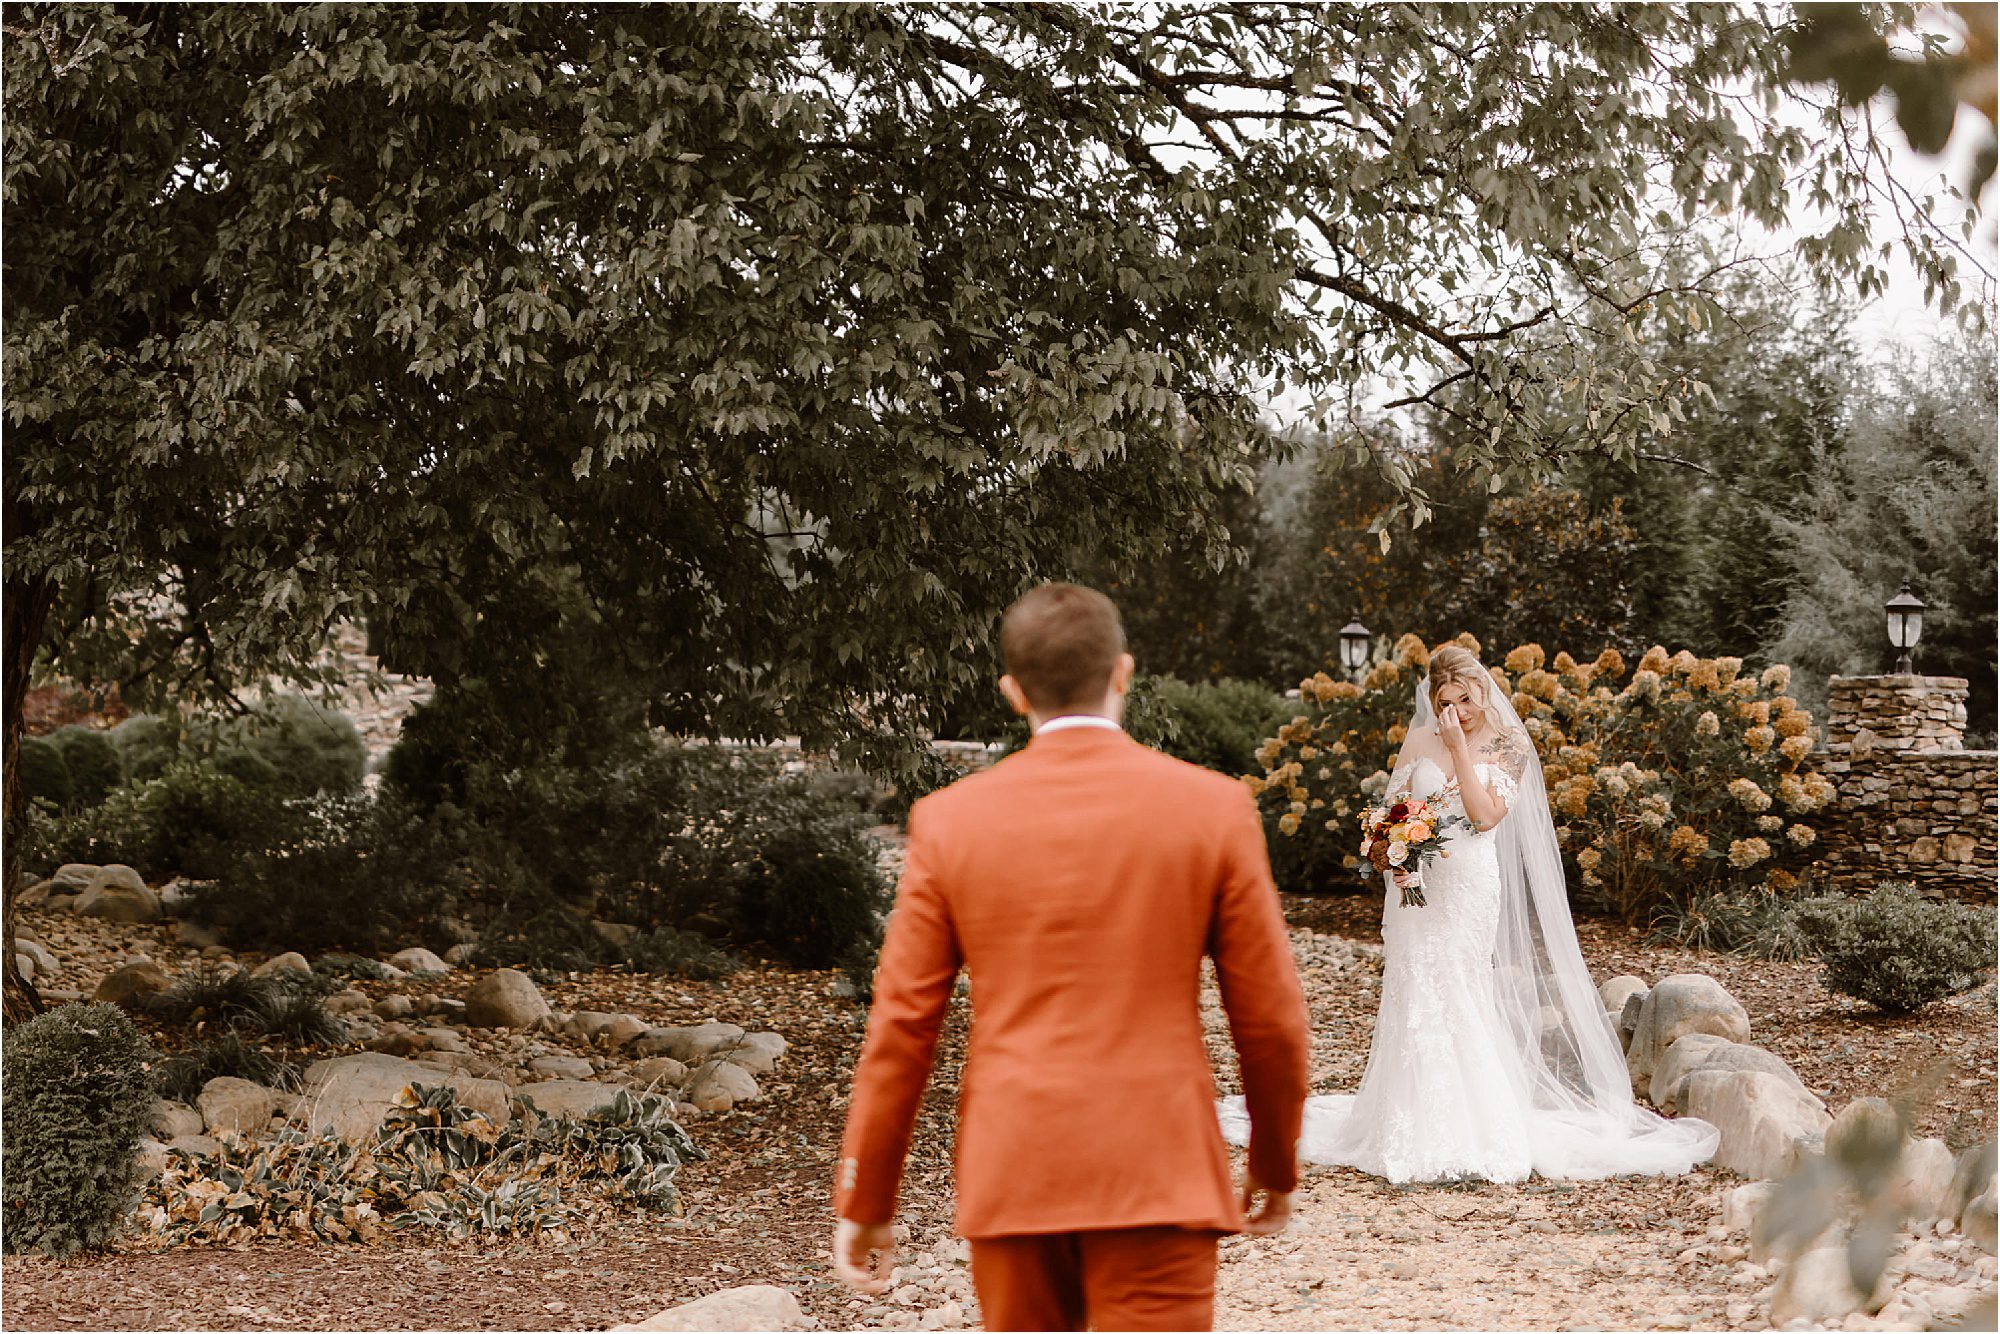 first look with groom in burnt orange suite and bride in sleeveless whtie wedding dress